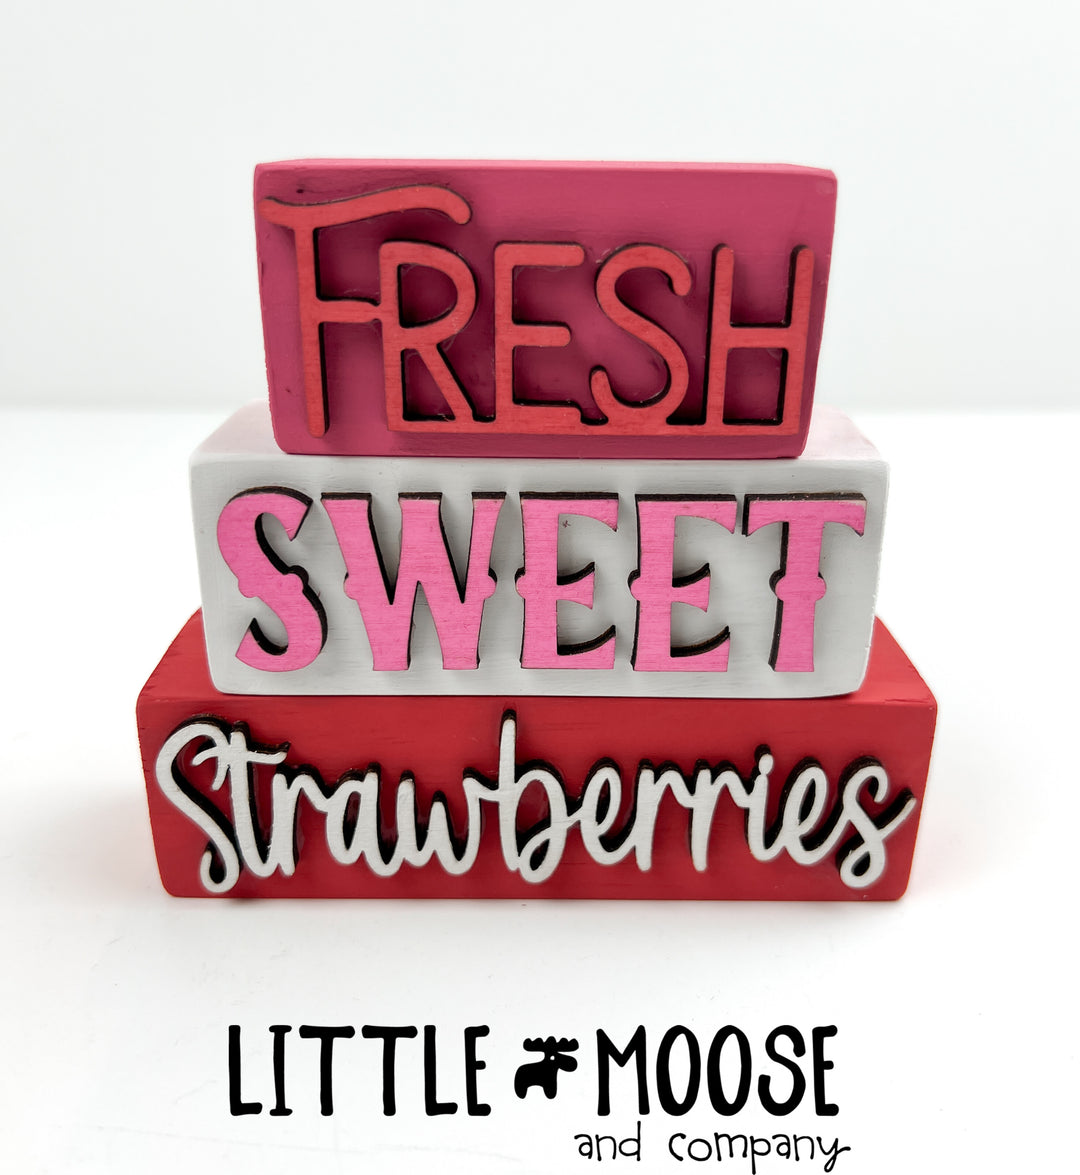 Word stacker - Strawberries